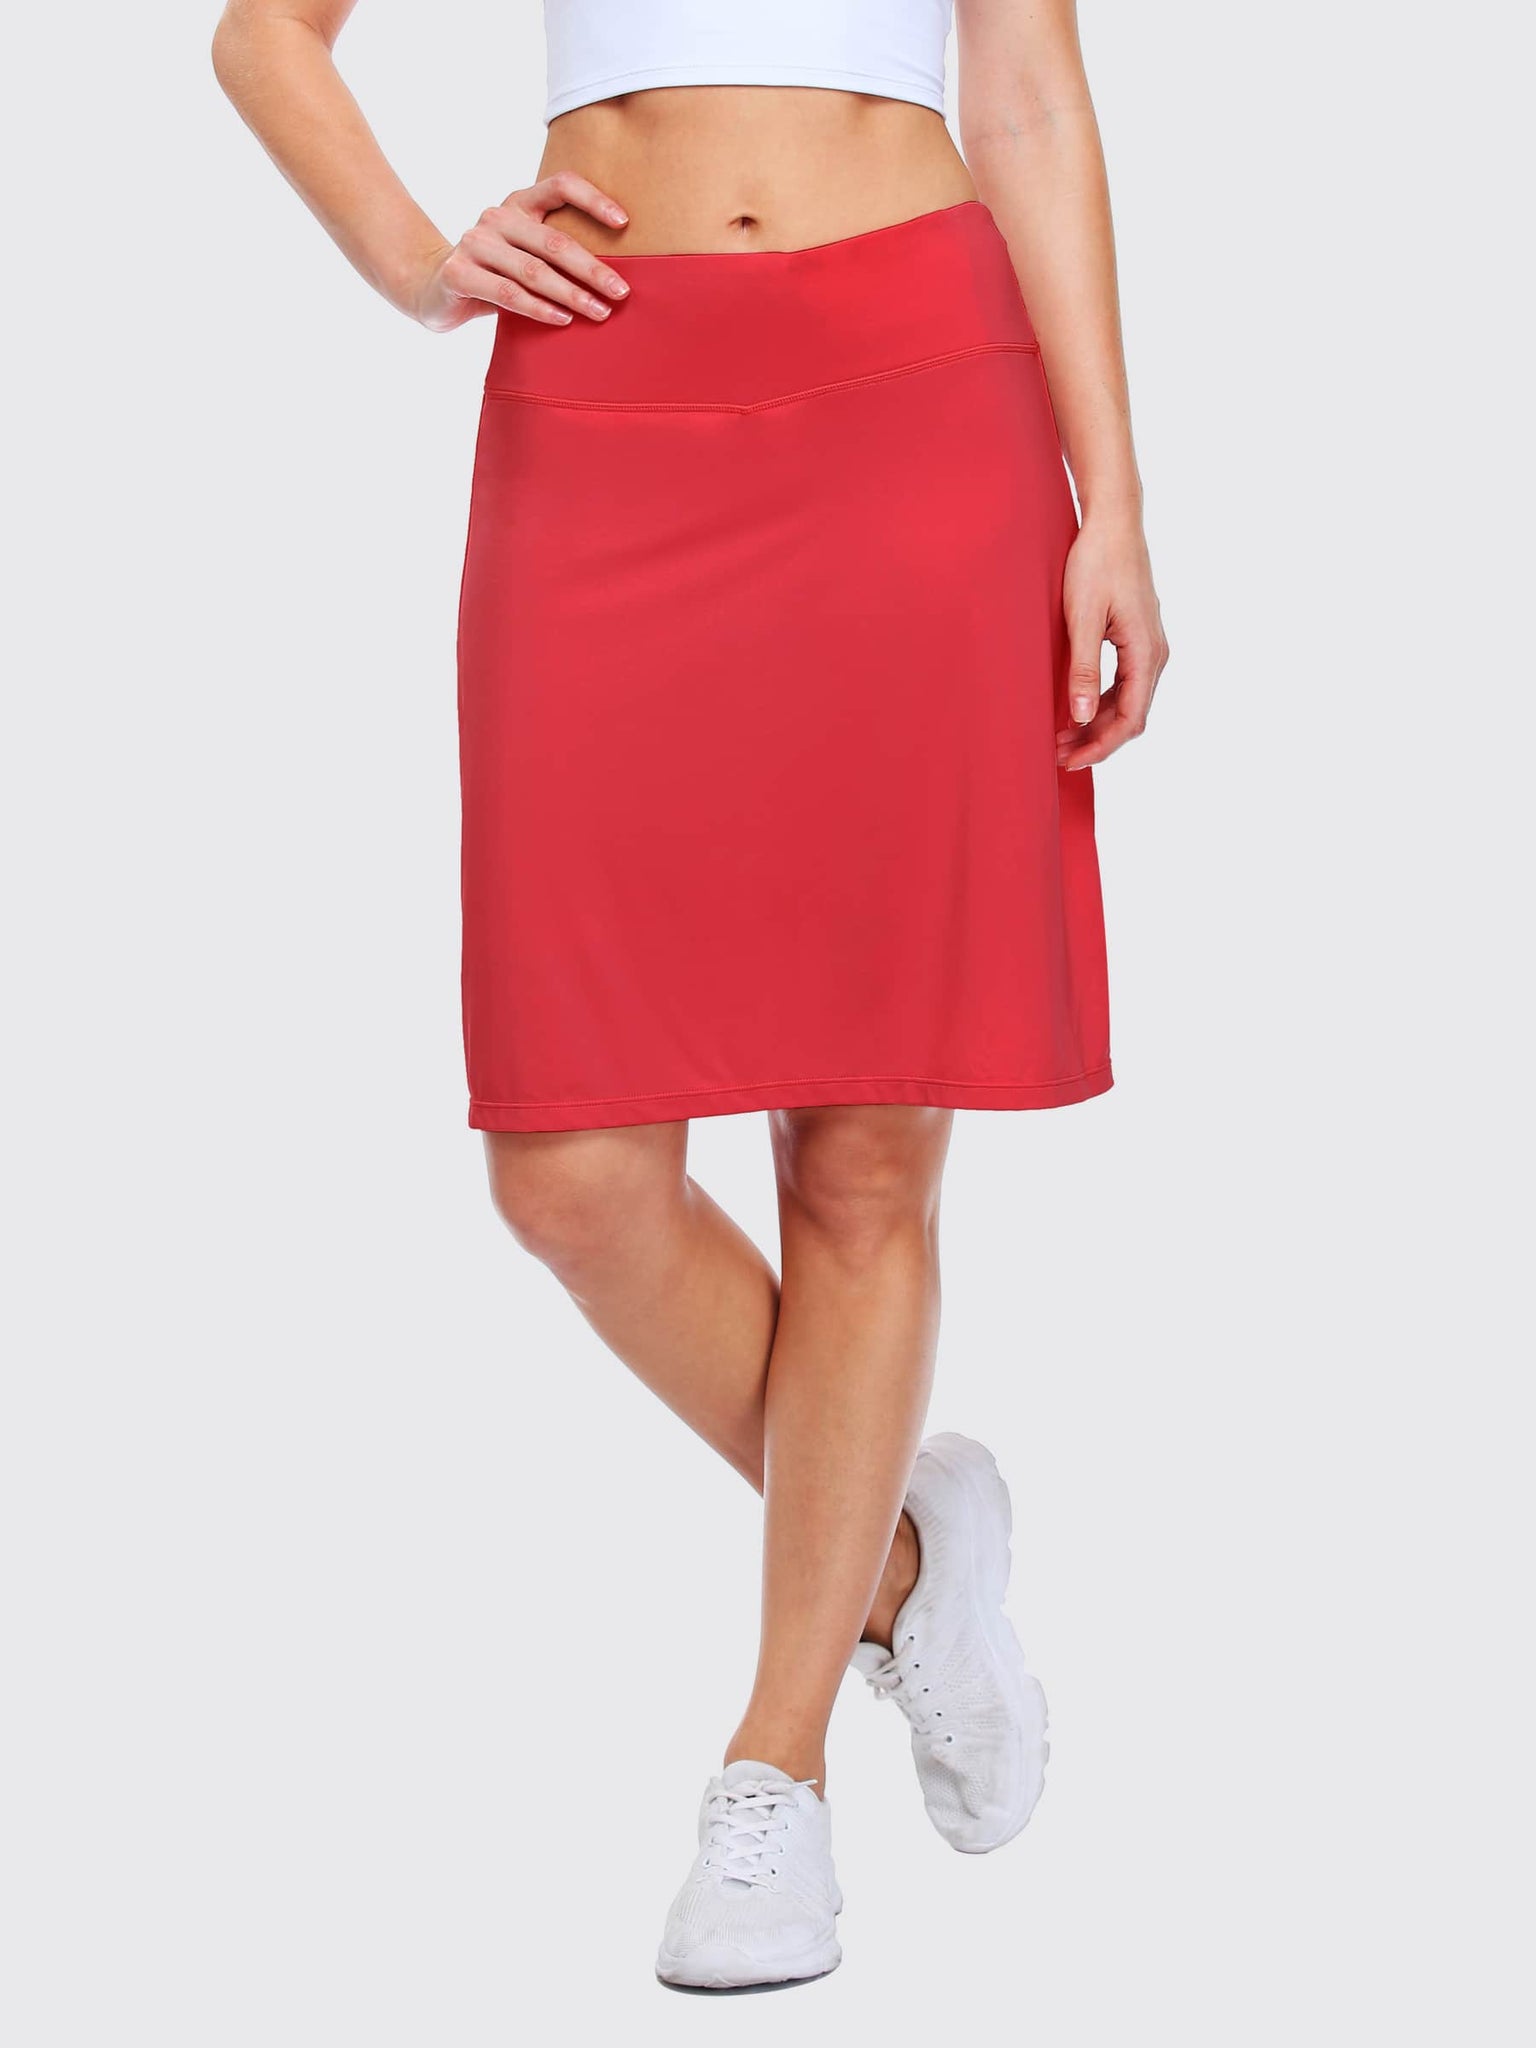 Women's Knee Length 20 Inch Sports Skorts Skirts_Red3